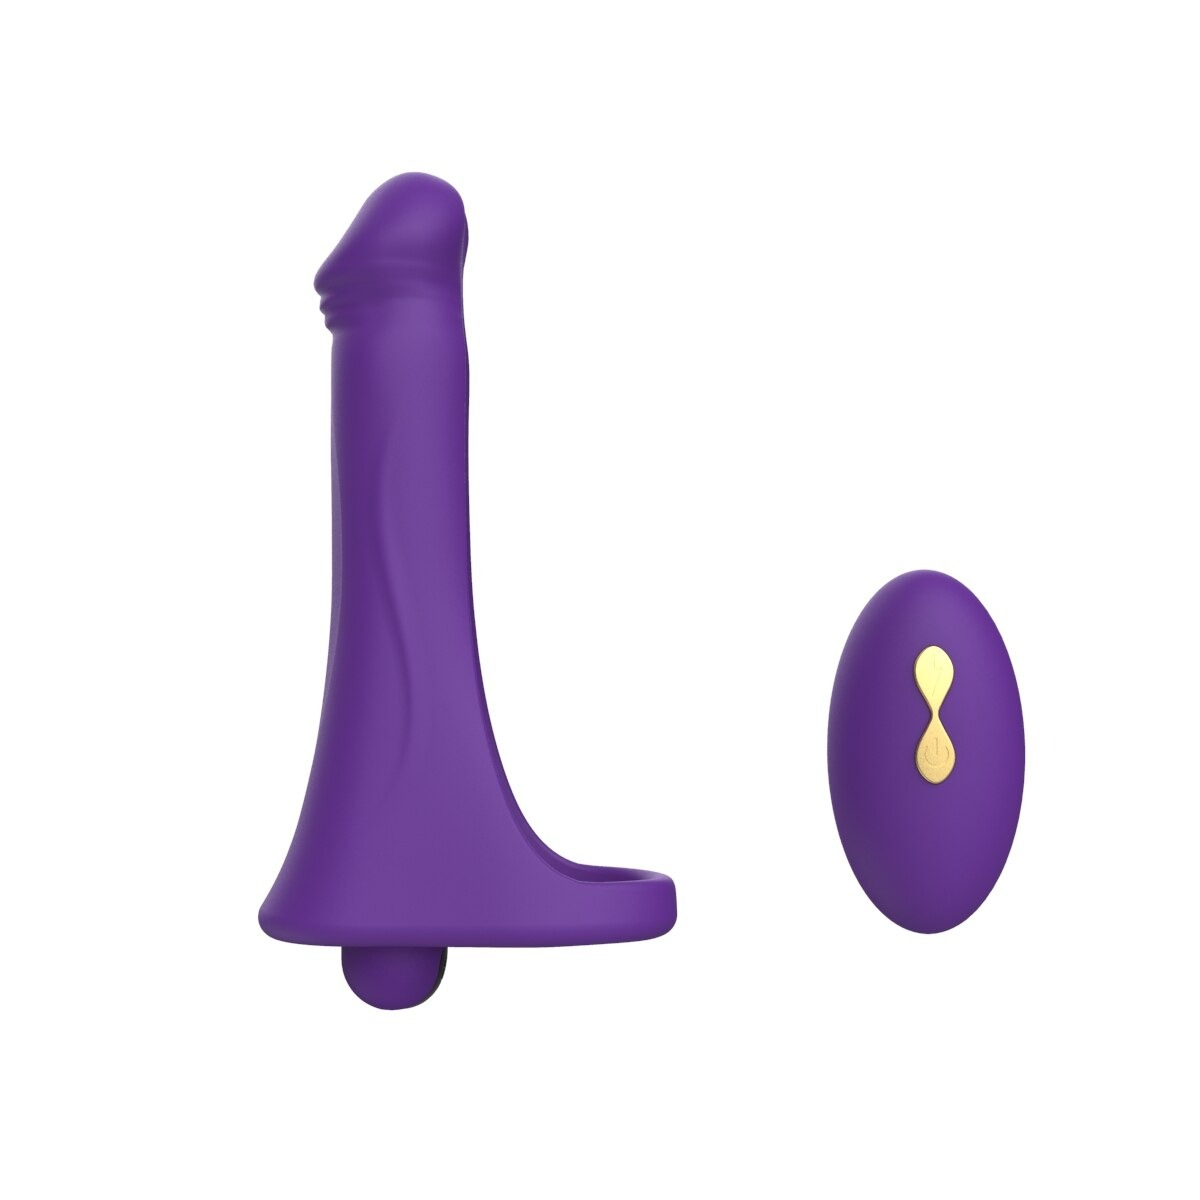 Wireless Silicone Double Penetration Vibrator / Waterproof Sex Toy Dildo for Men - EVE's SECRETS